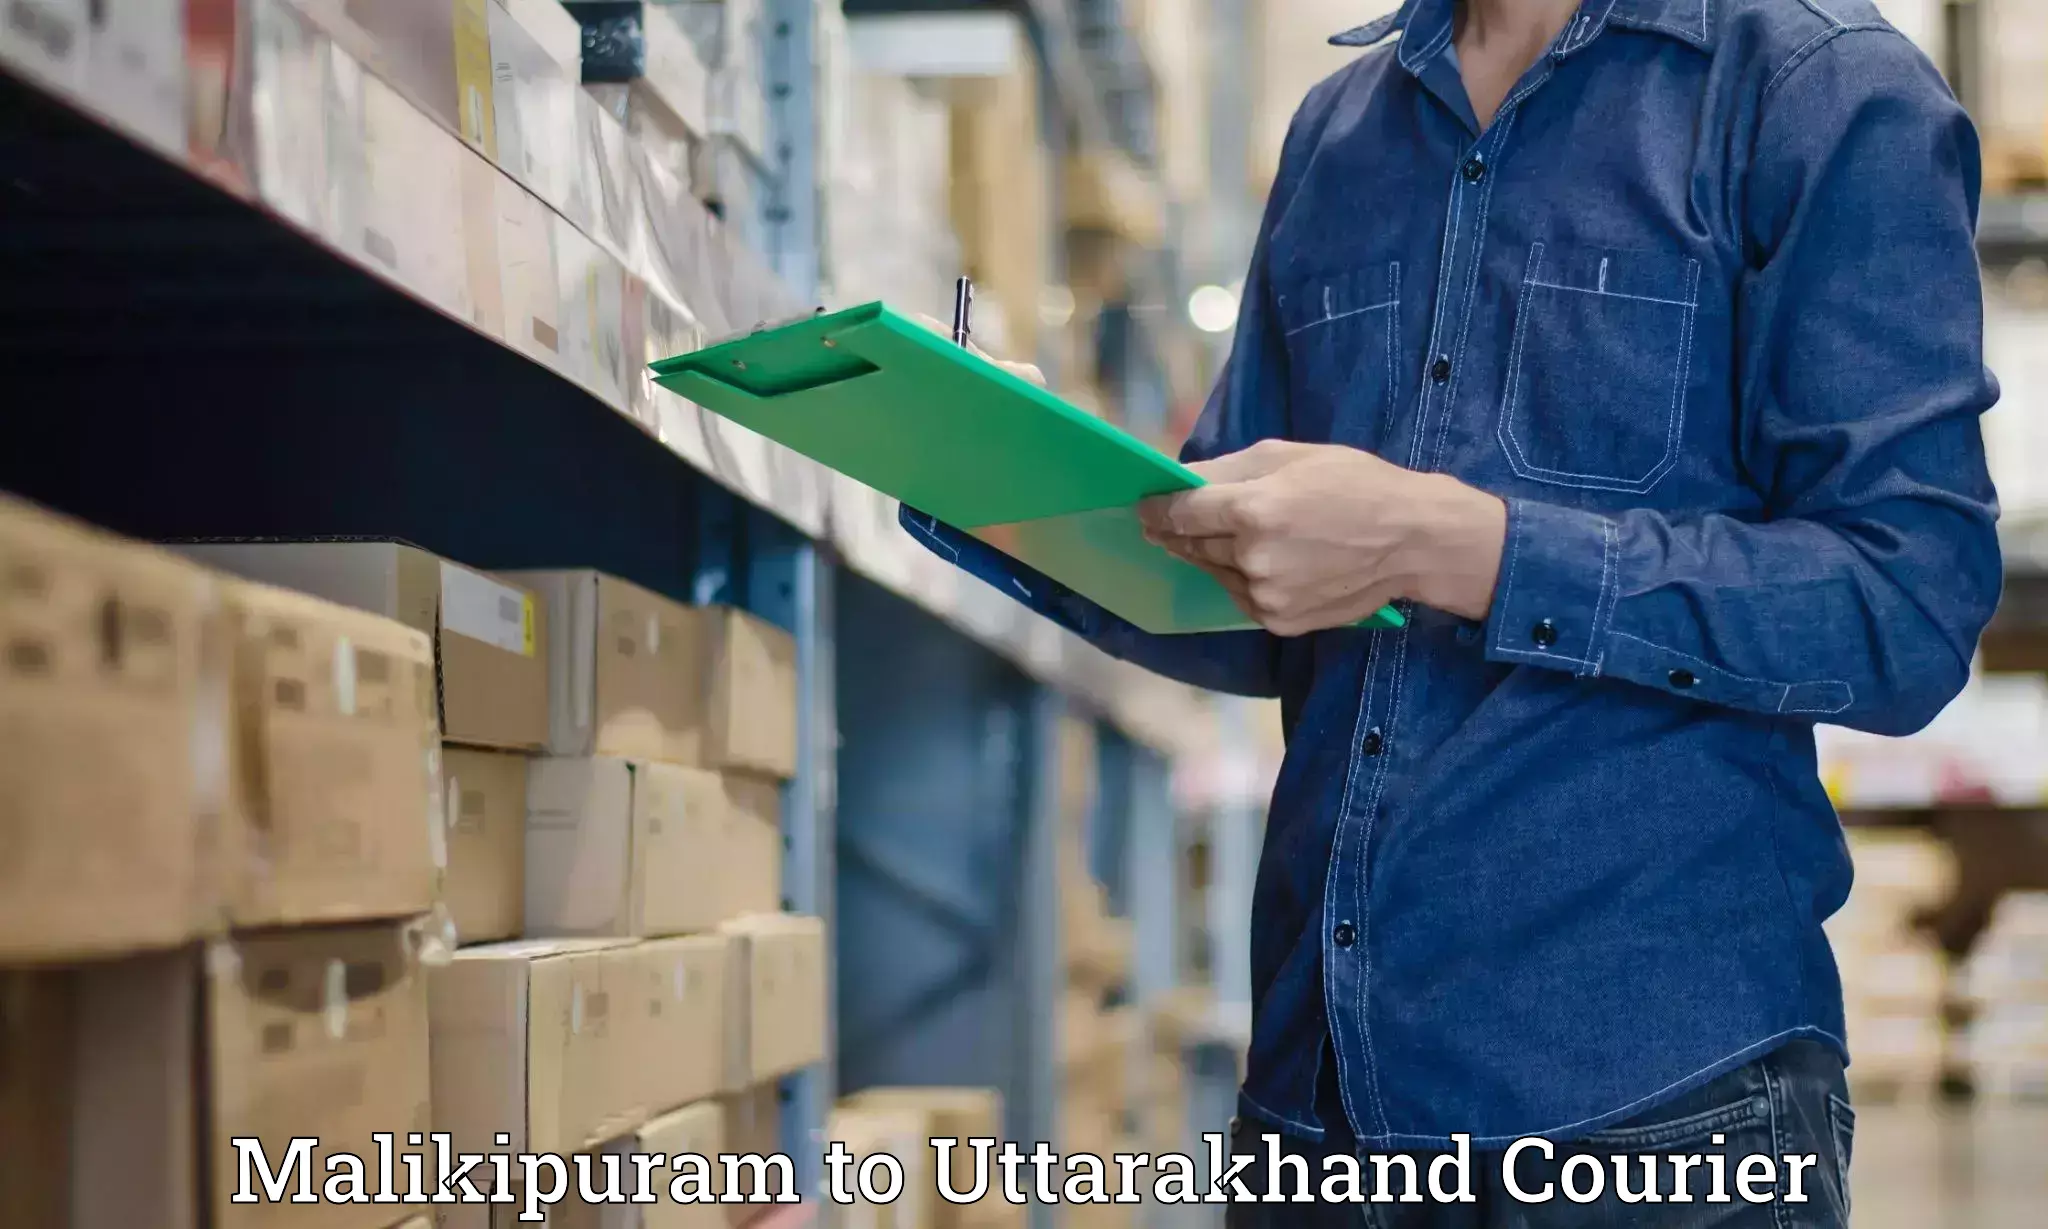 Express logistics providers Malikipuram to Rishikesh